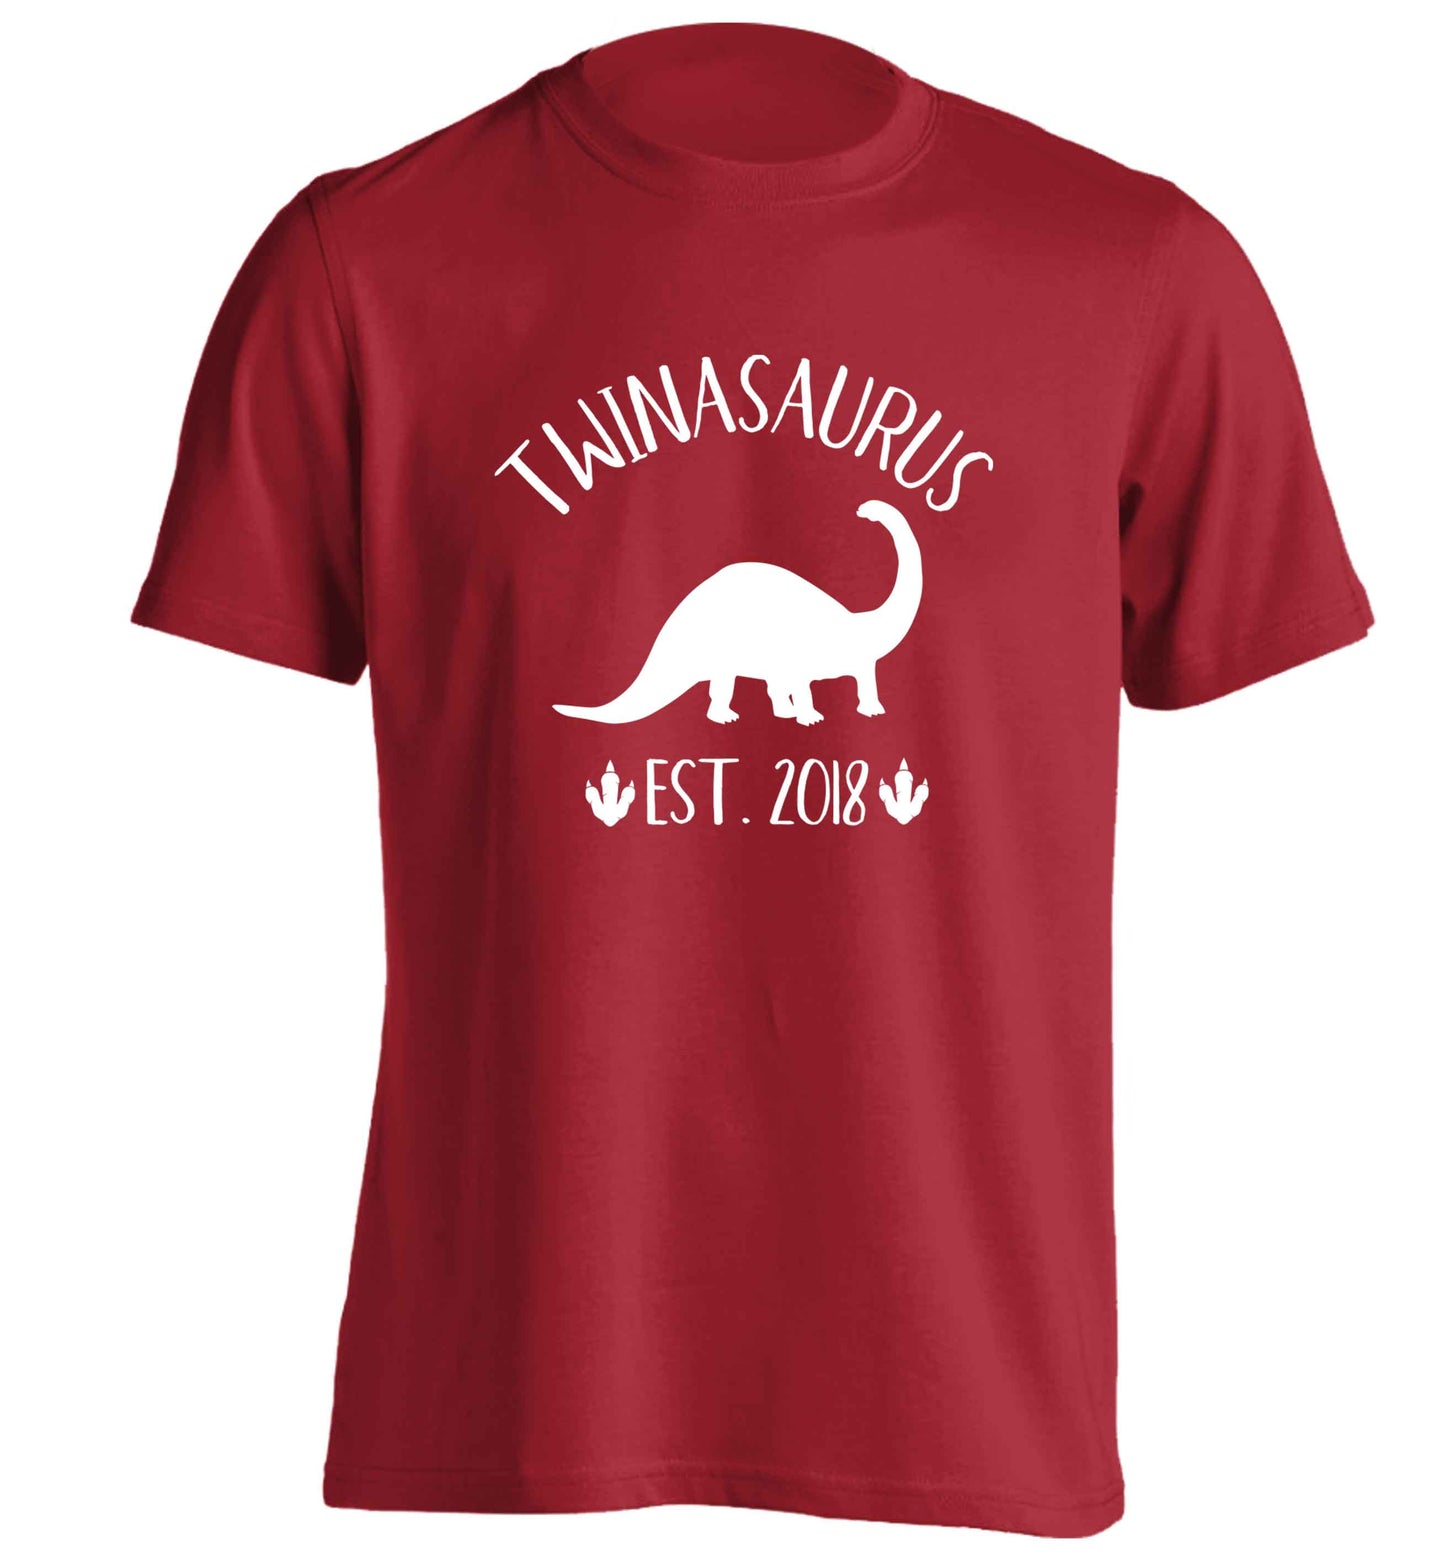 Personalised twinasaurus since (custom date) adults unisex red Tshirt 2XL